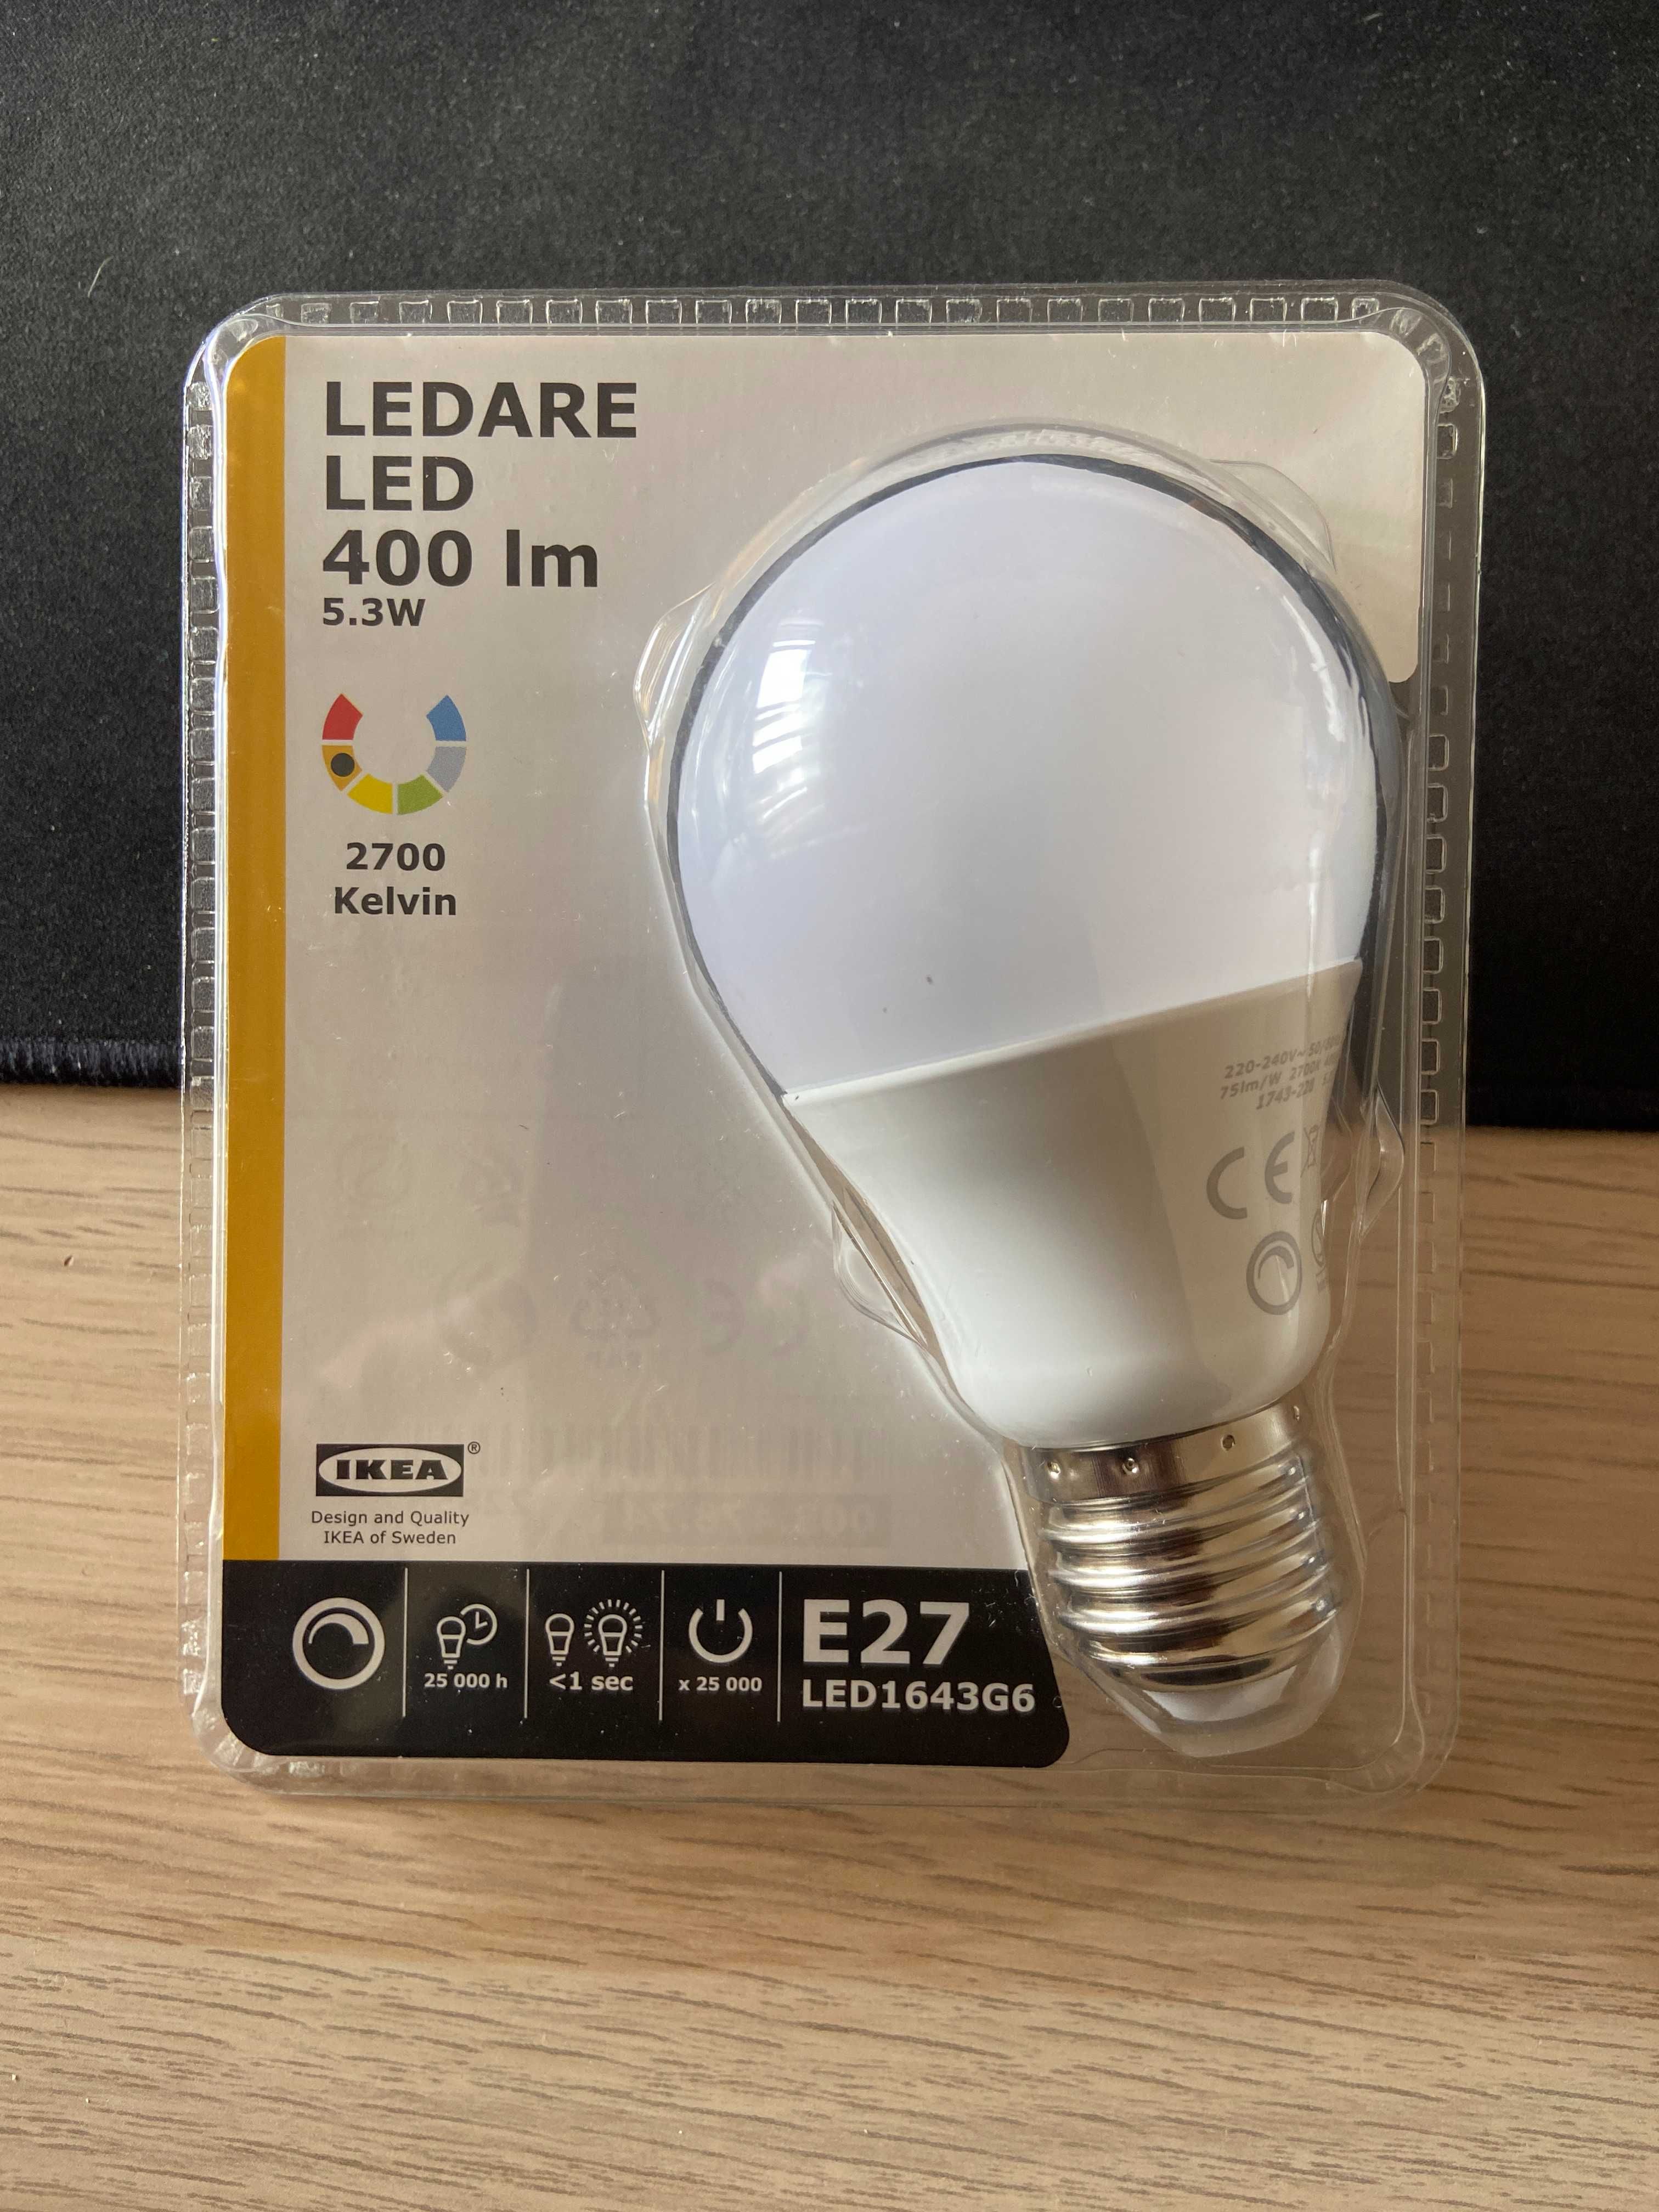 IKEA - LEDARE LED 400lm Novas